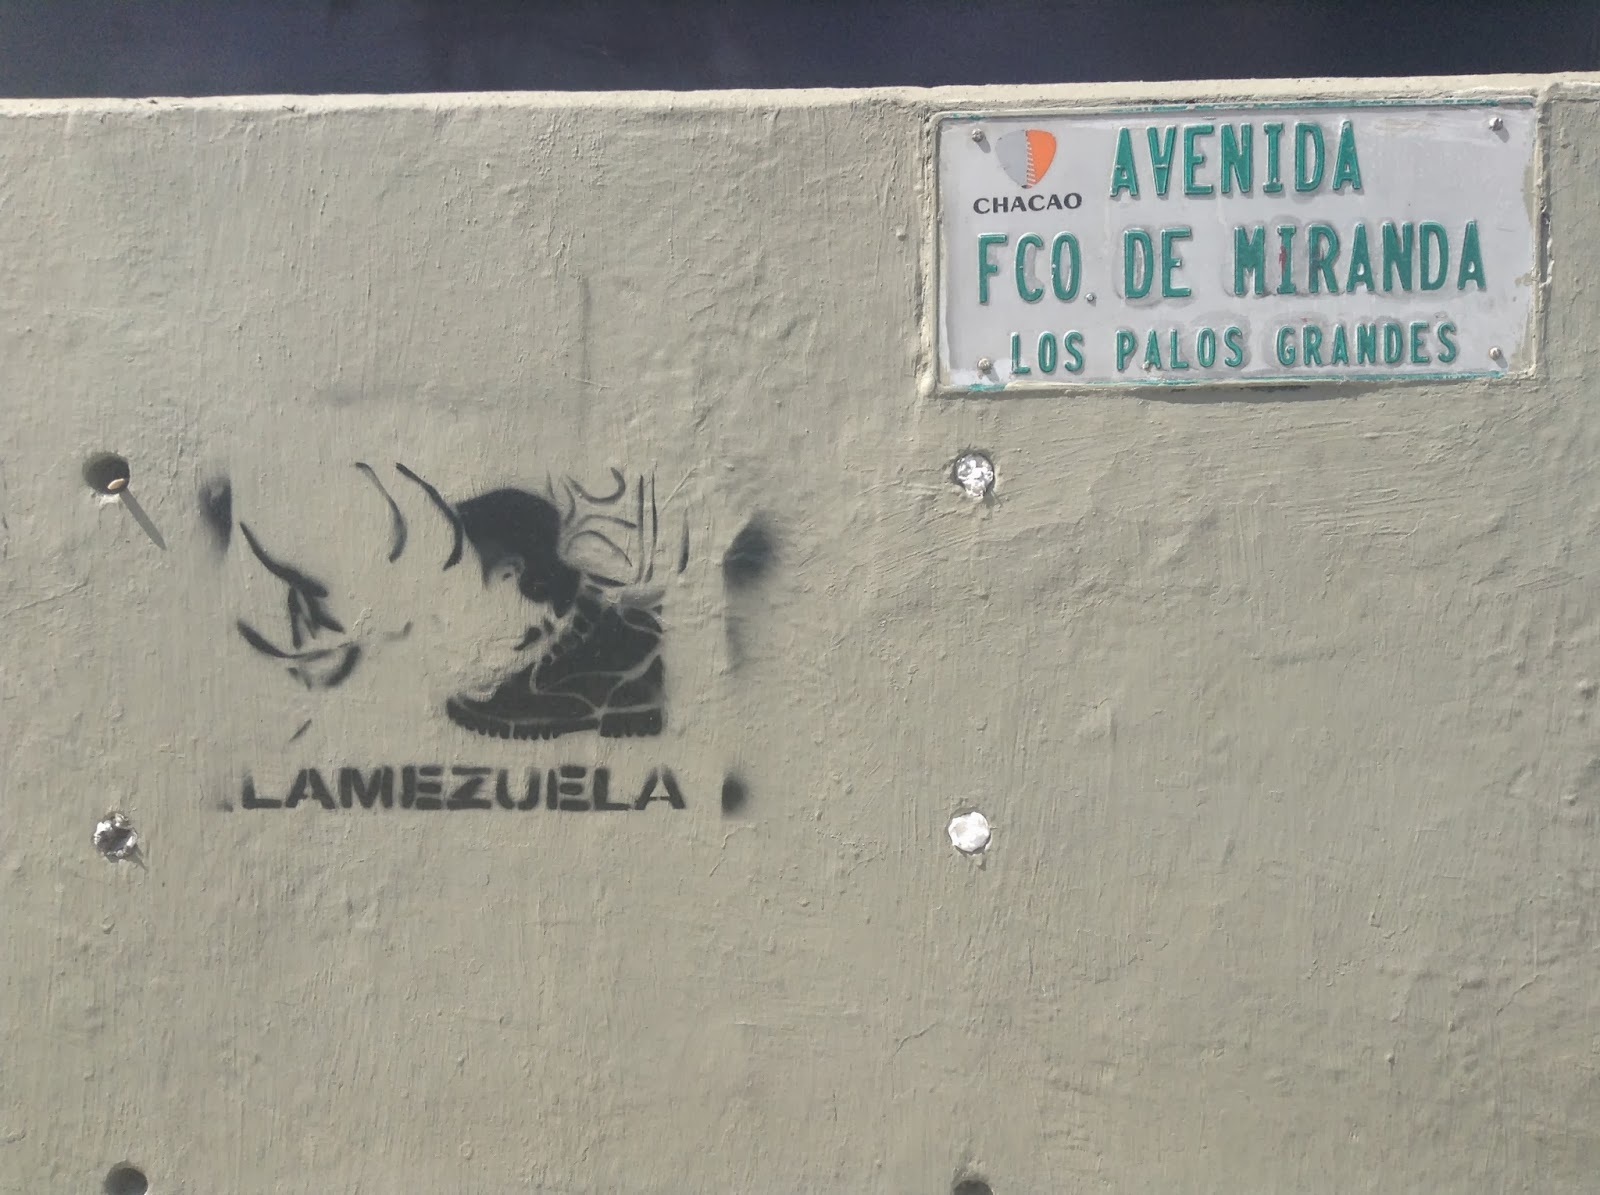 Imagen de Lamezuela impresa en las calles de Caracas.